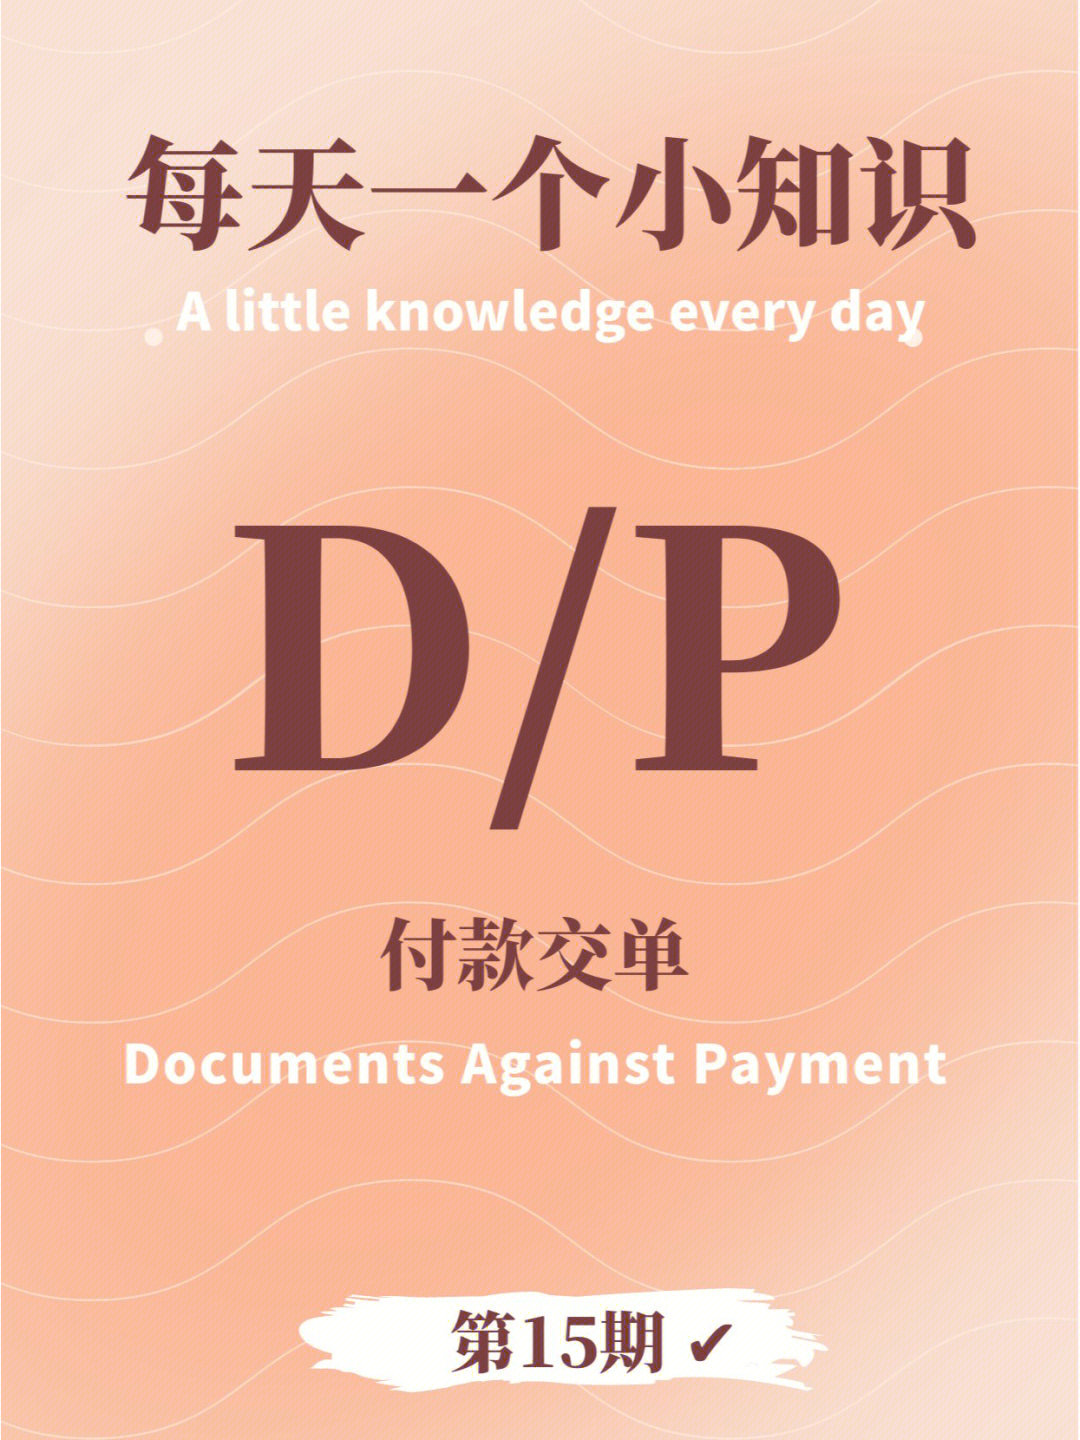 99d/p中文称: 付款交单97指出口人的交单是以进口人的付款为条件